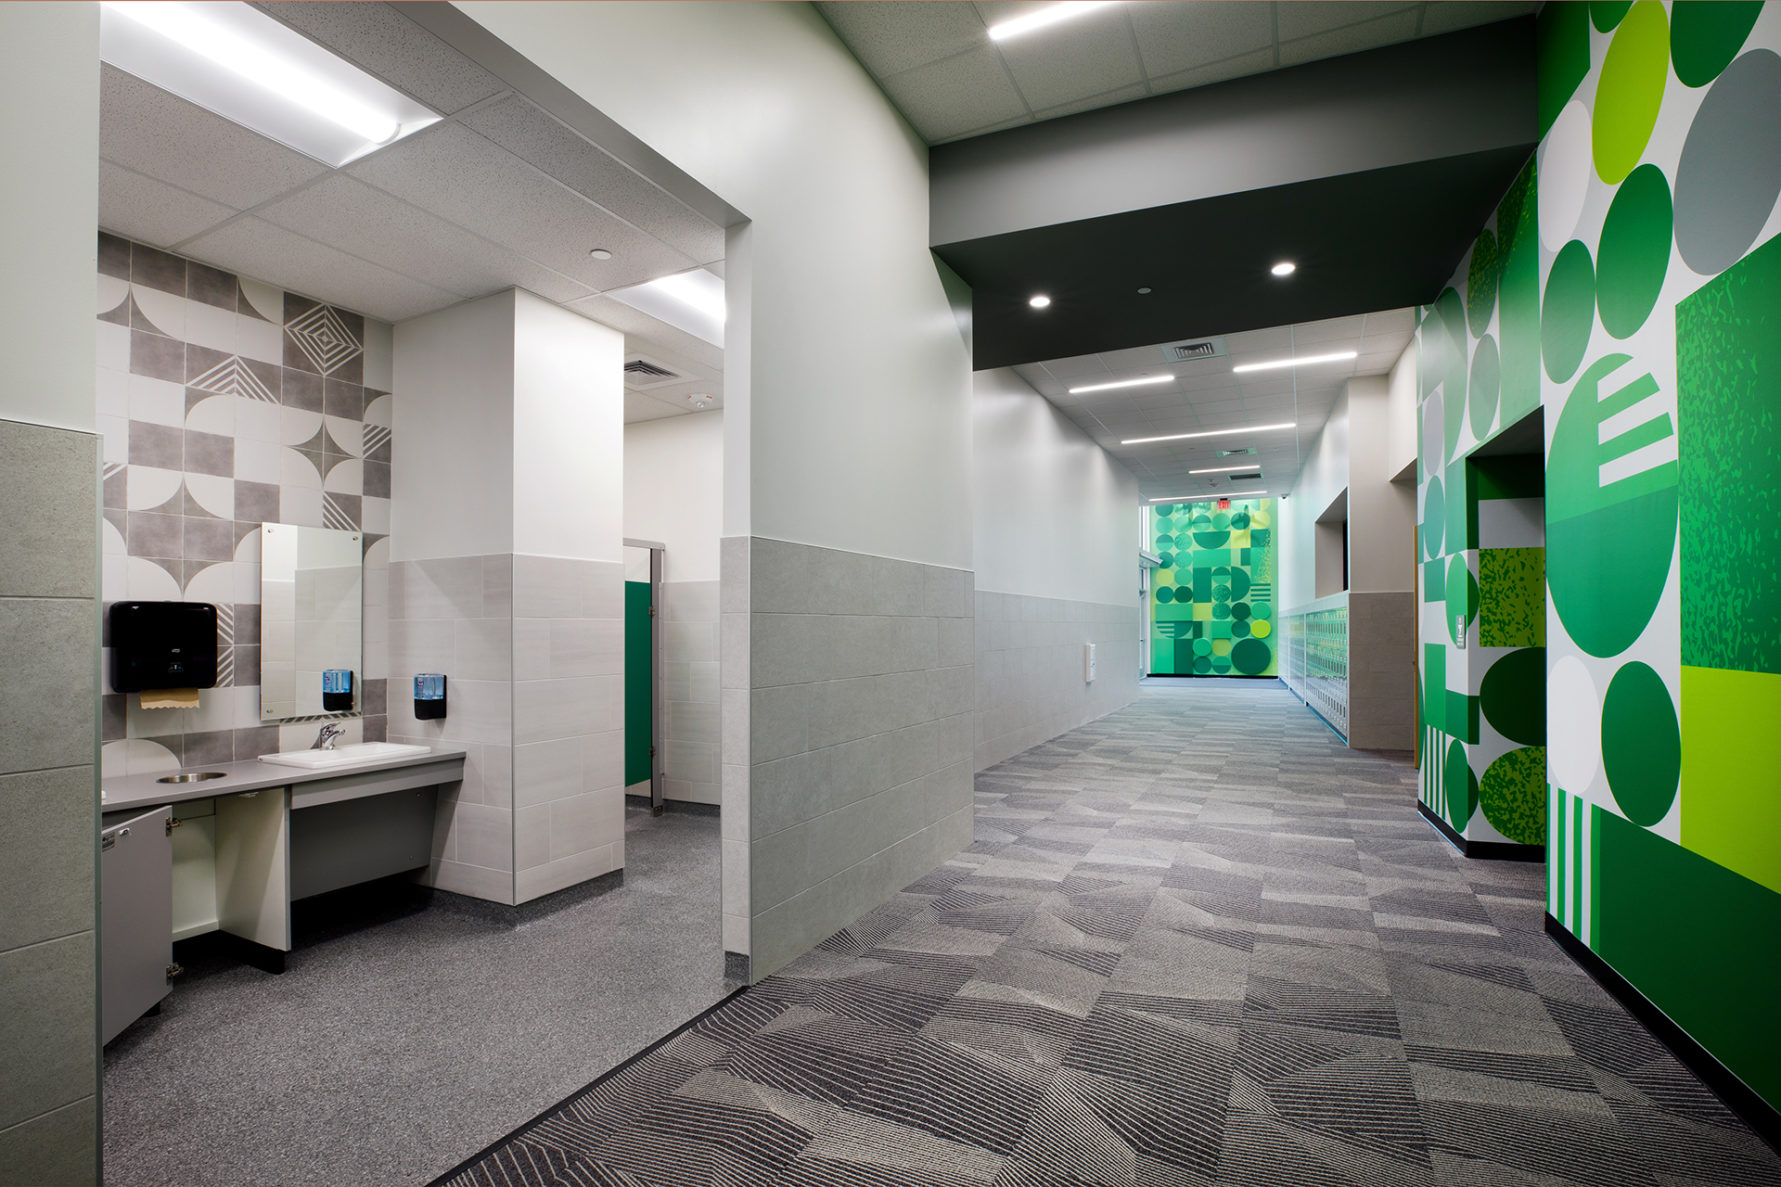 stone creek bathroom hallway that features bright green wall designs